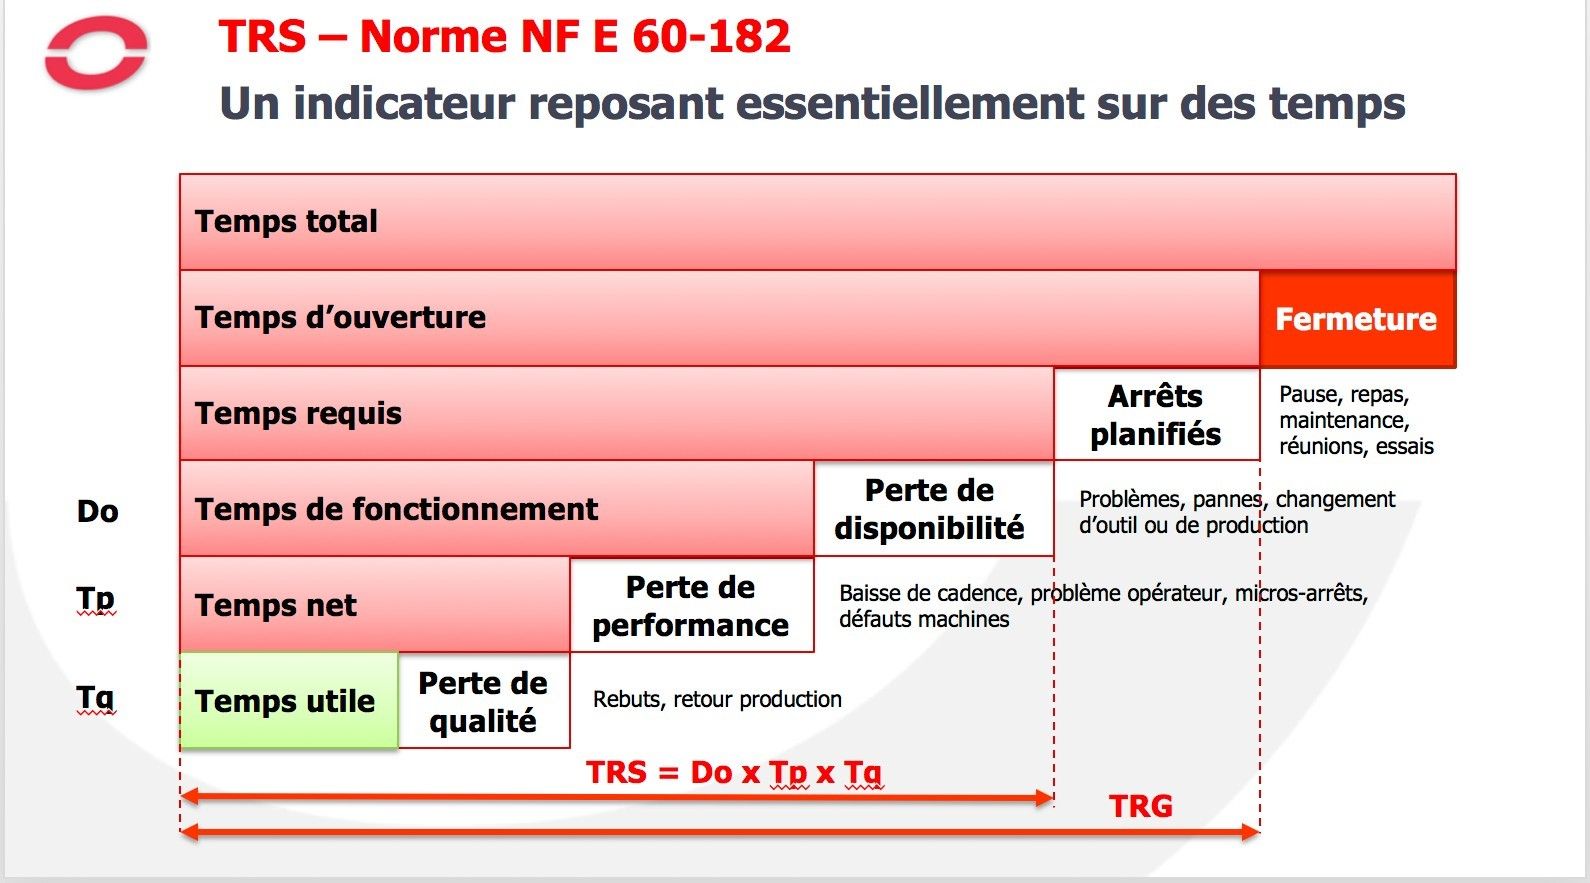 TRS et norme NF E 60-182